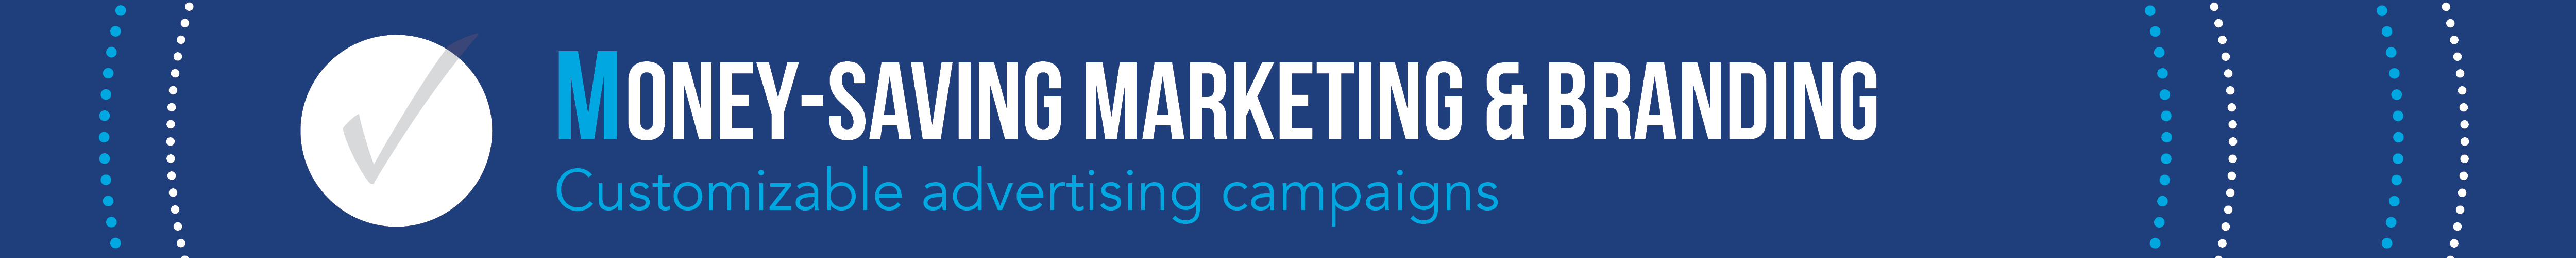 money-saving marketing and branding